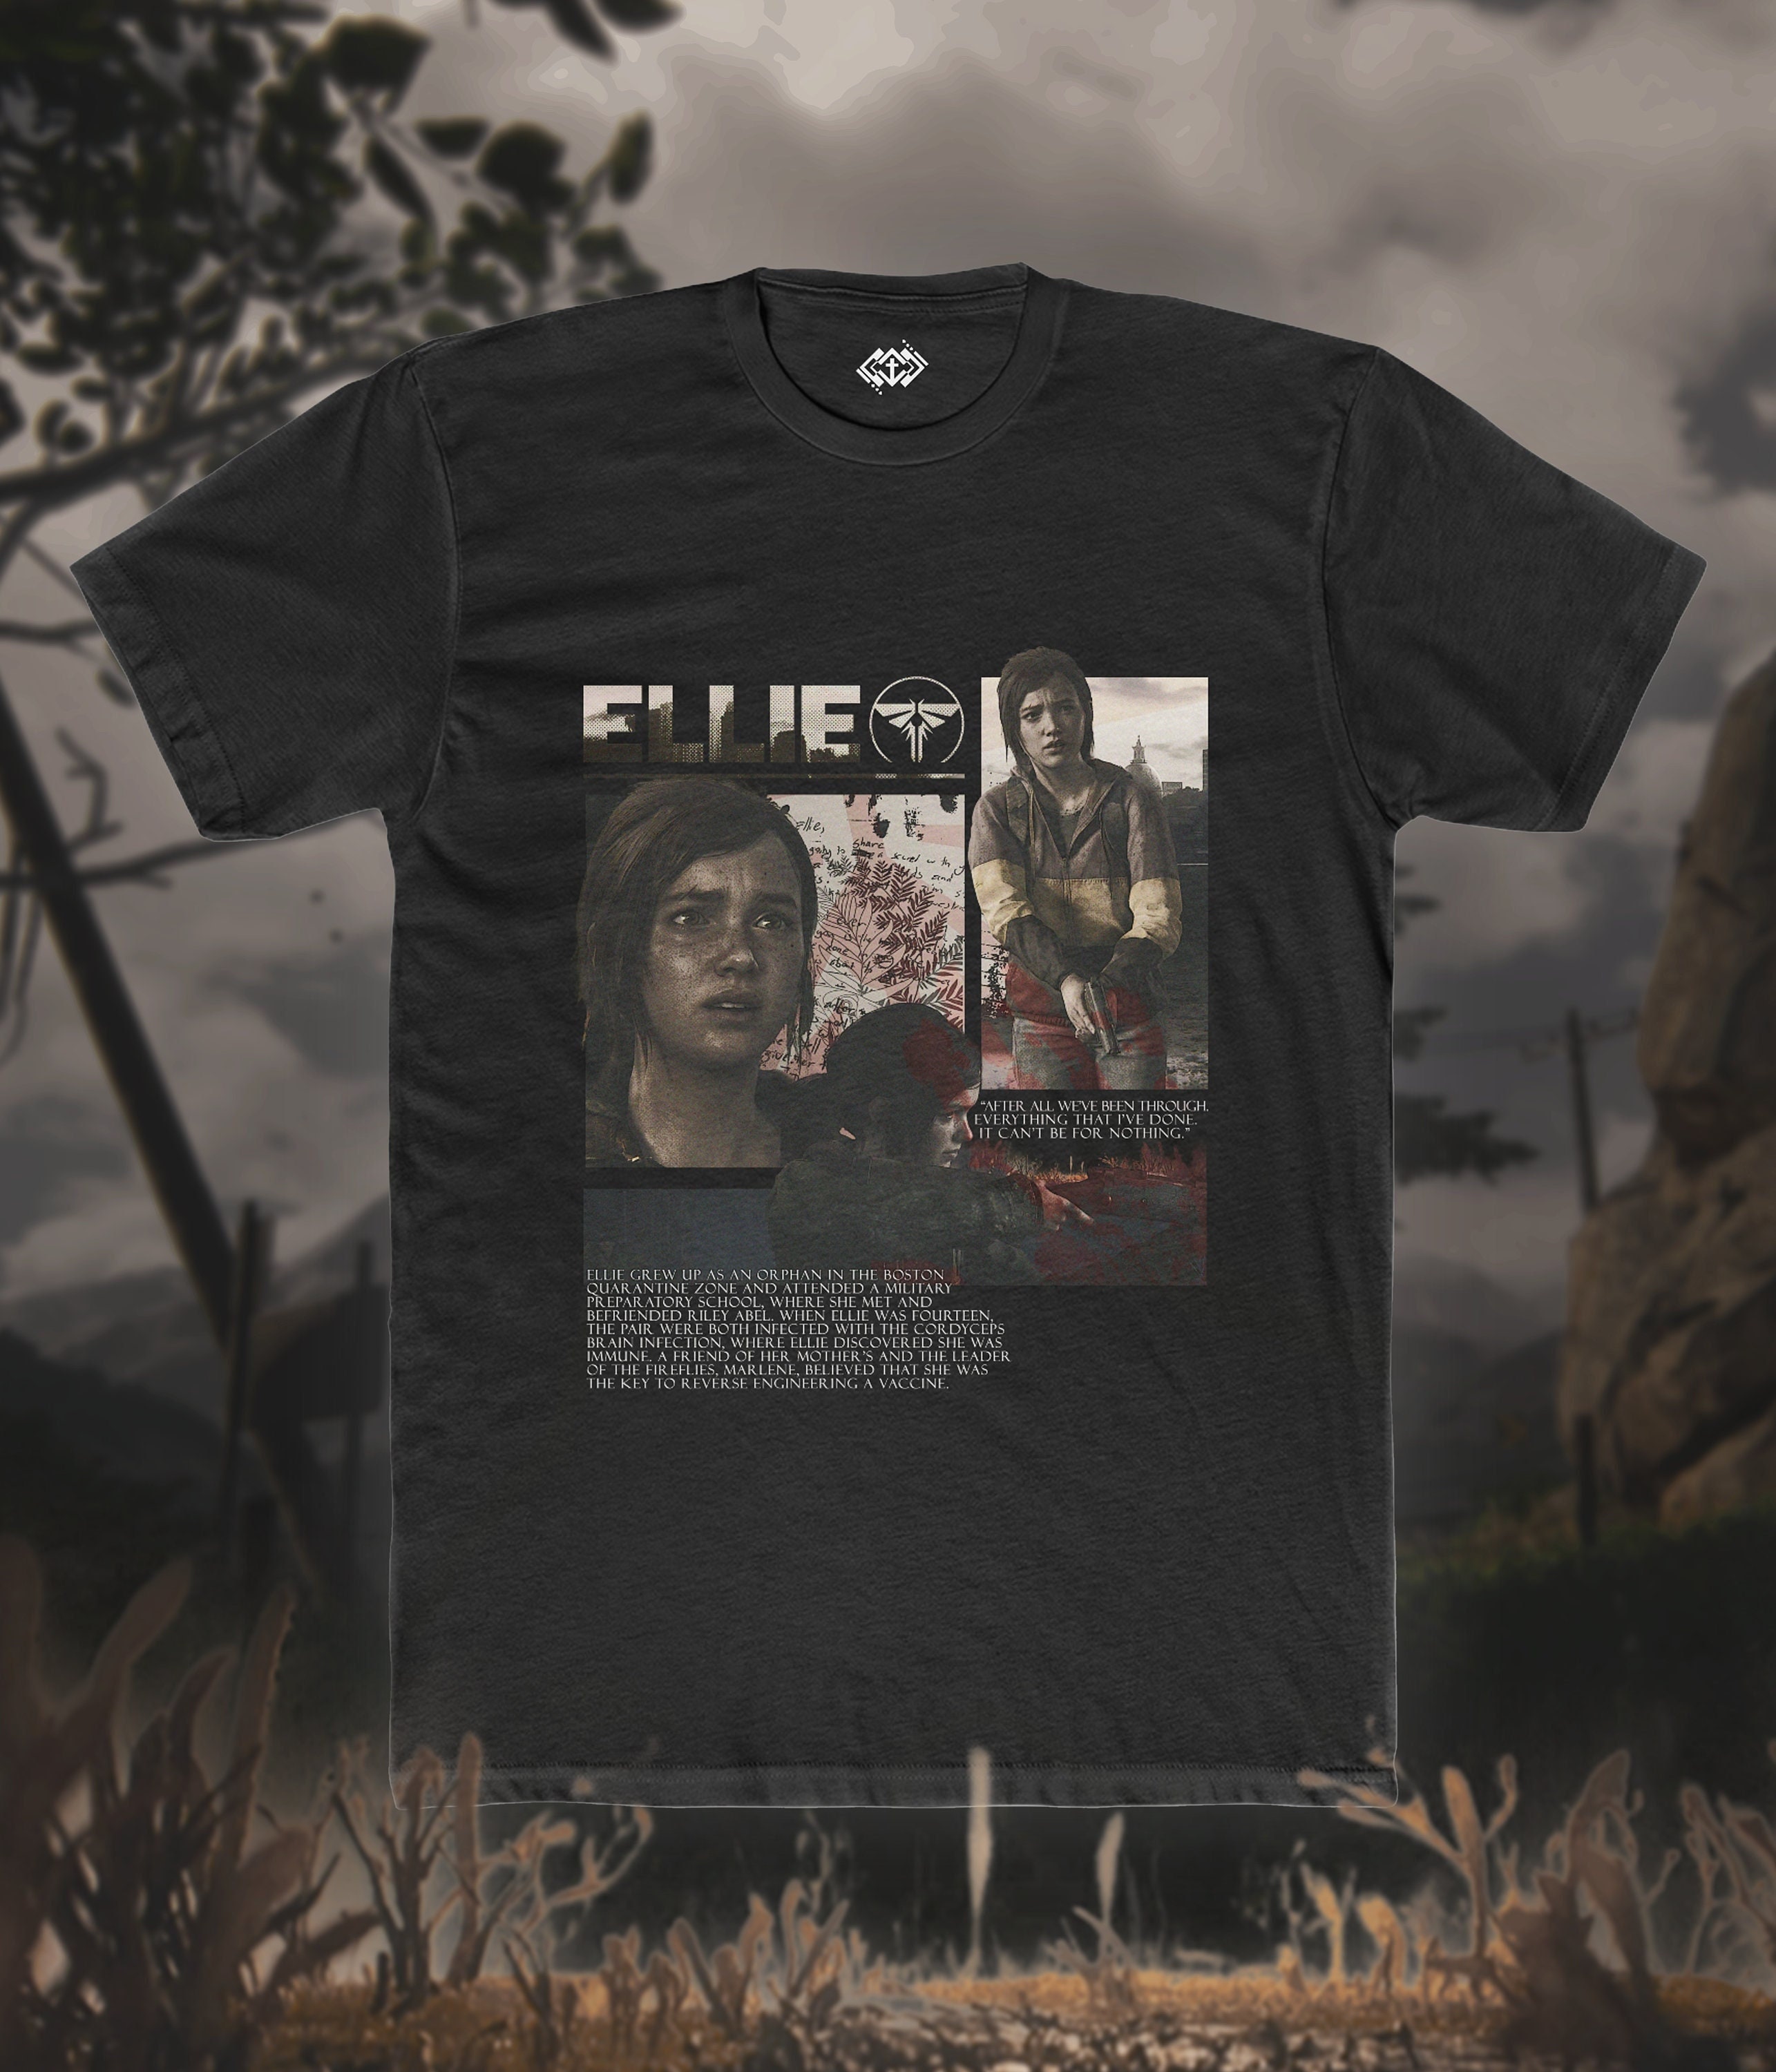 Buy Ellie Tattoo - The Last of Us Shirt • SOLIDPOP ®